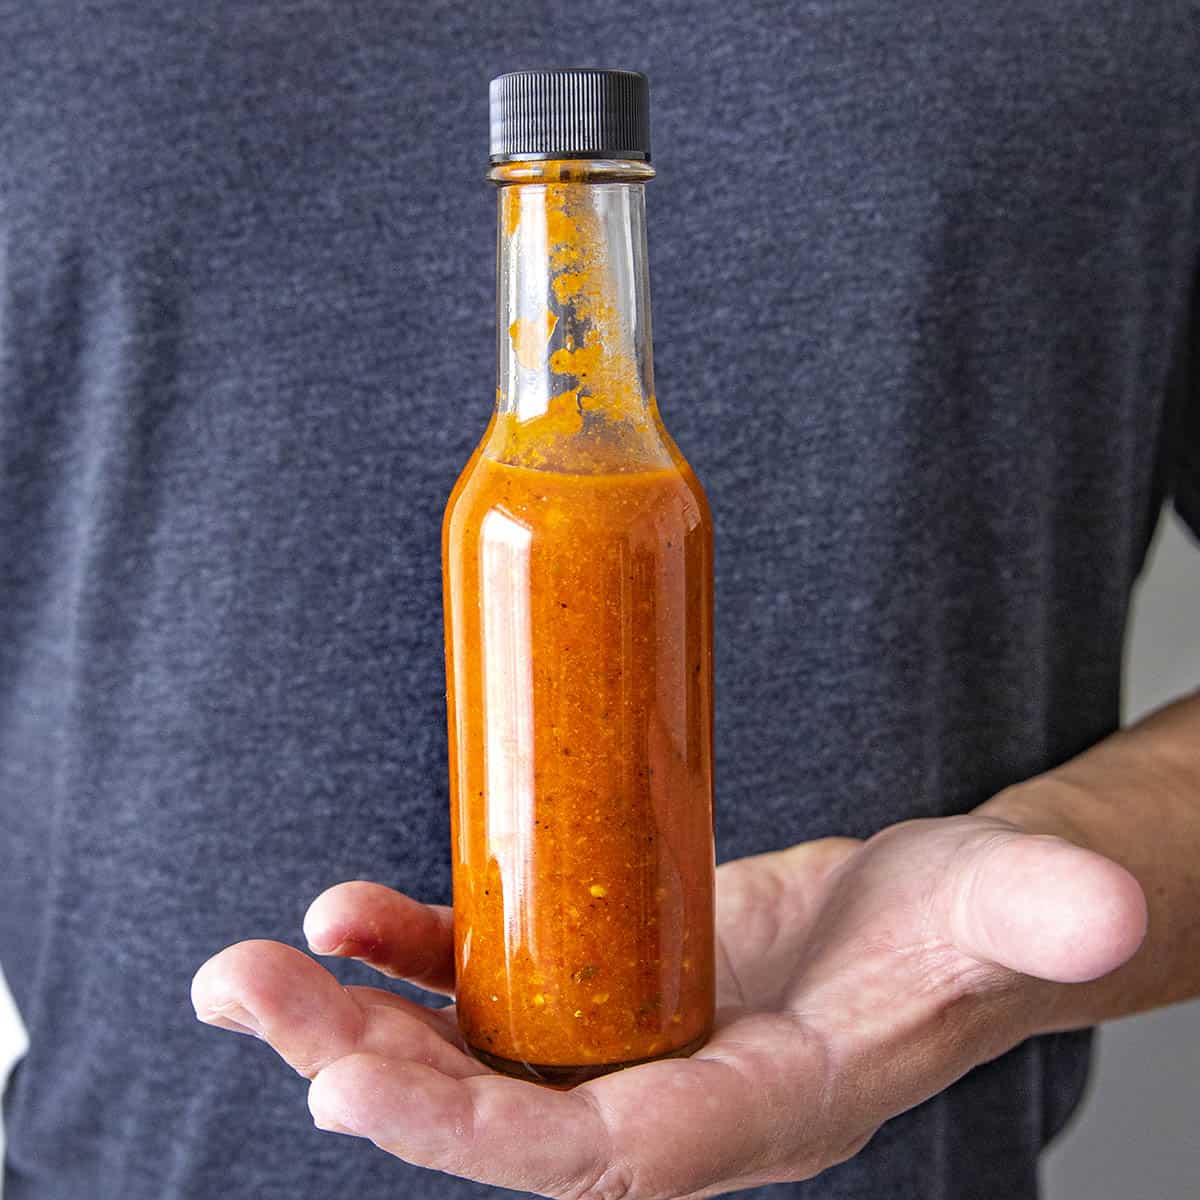 The Hottest Damn Hot Sauce I Ever Made Recipe - Chili Pepper Madness